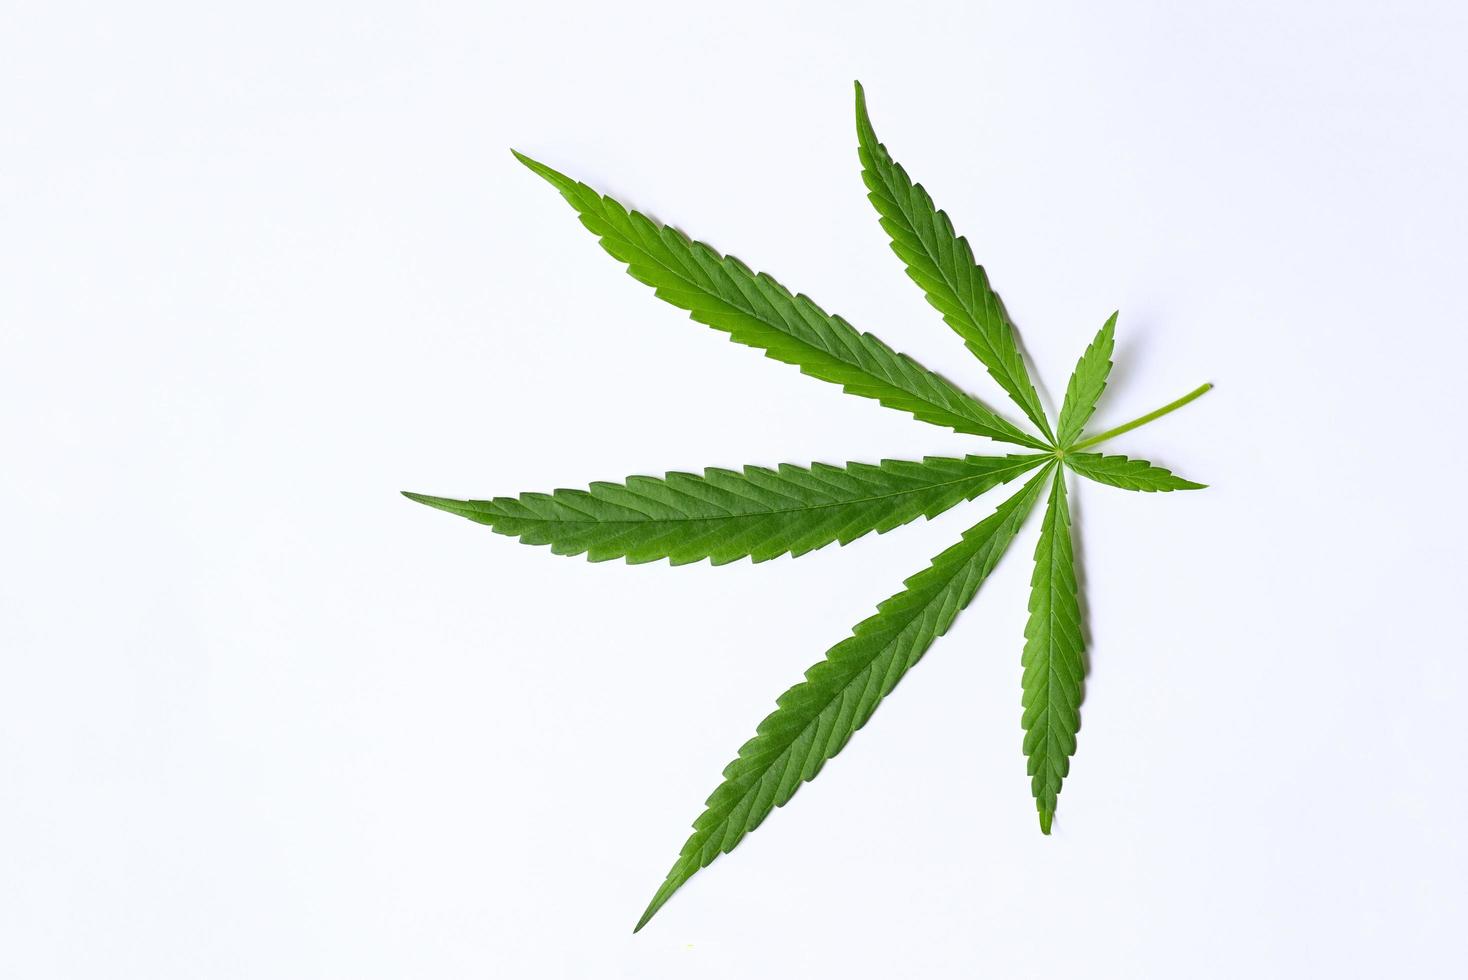 Cannabis leaf on white grey background, Cannabis Hemp leaves or marijuana leaf plant - top view photo